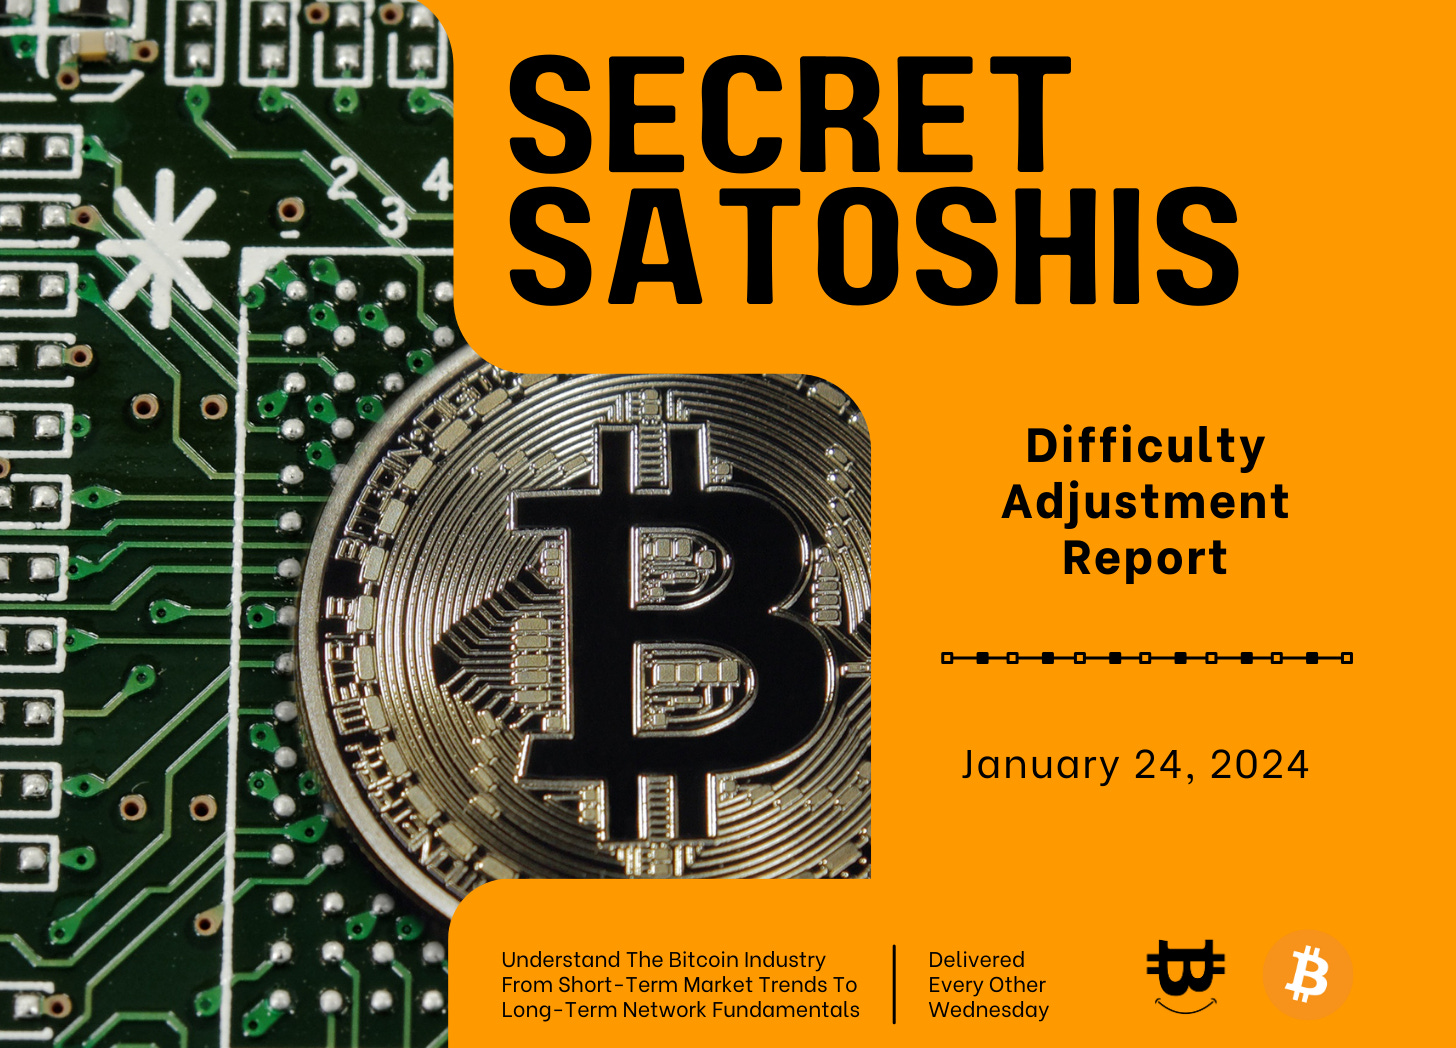 SecretSatoshis Difficulty Adjustment Report Cover Image